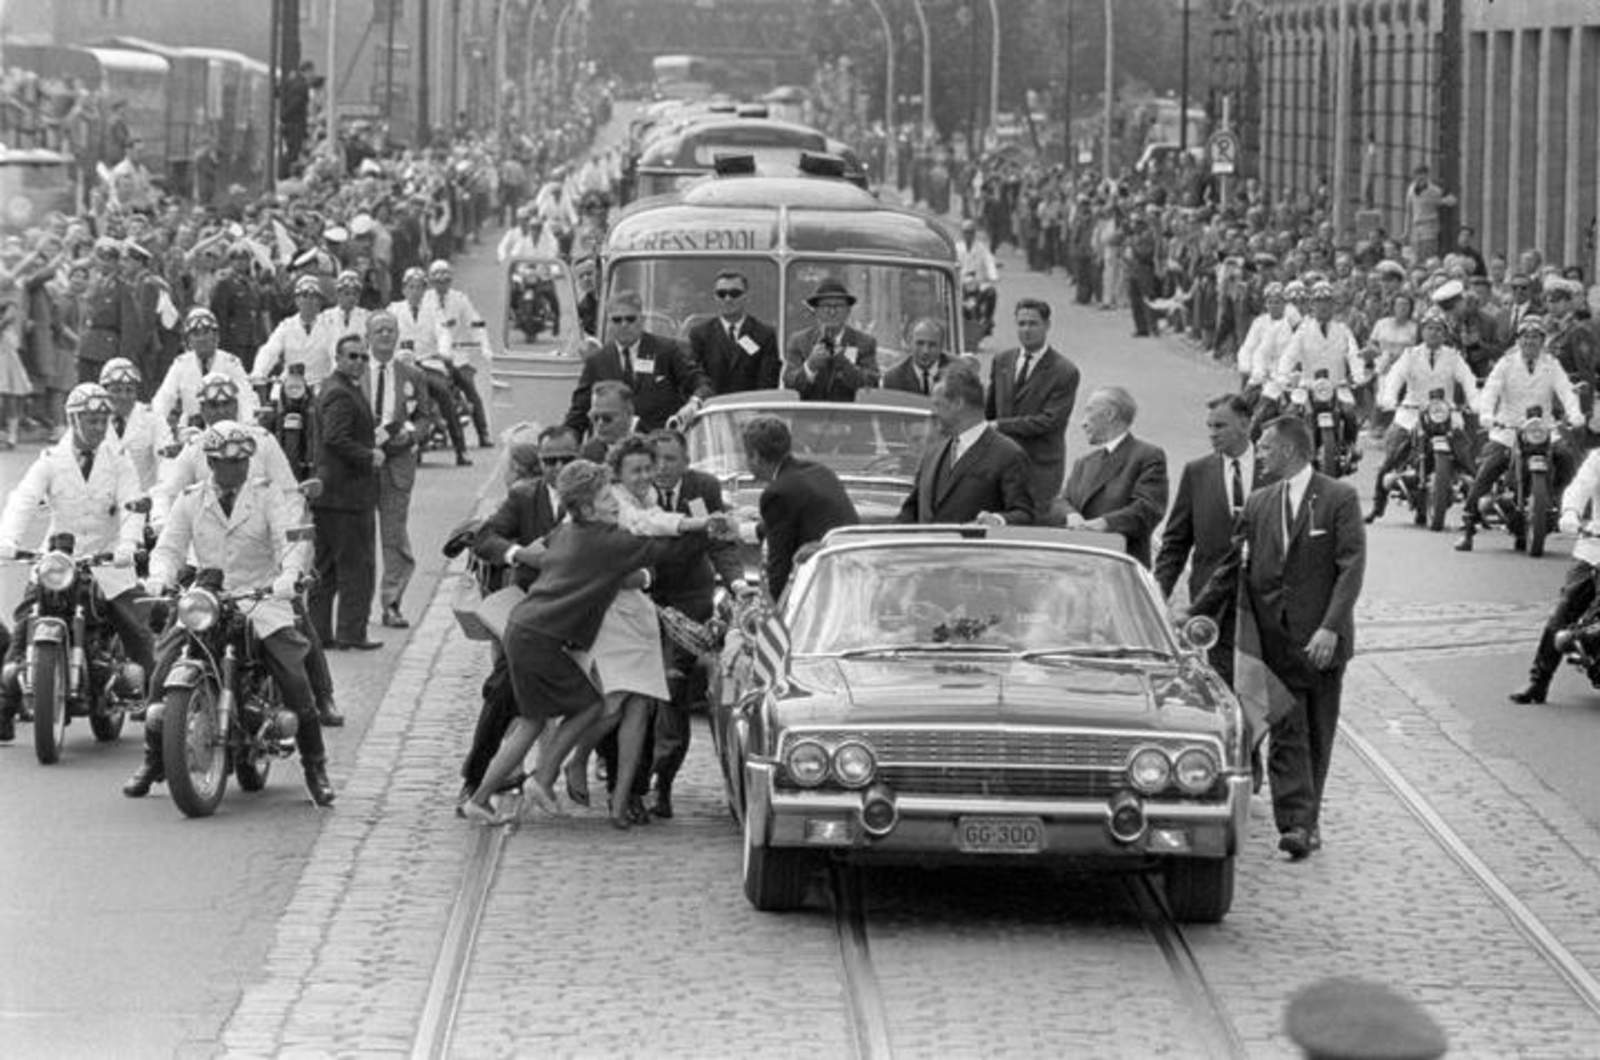 1963: El presidente estadounidense John F. Kennedy es asesinado